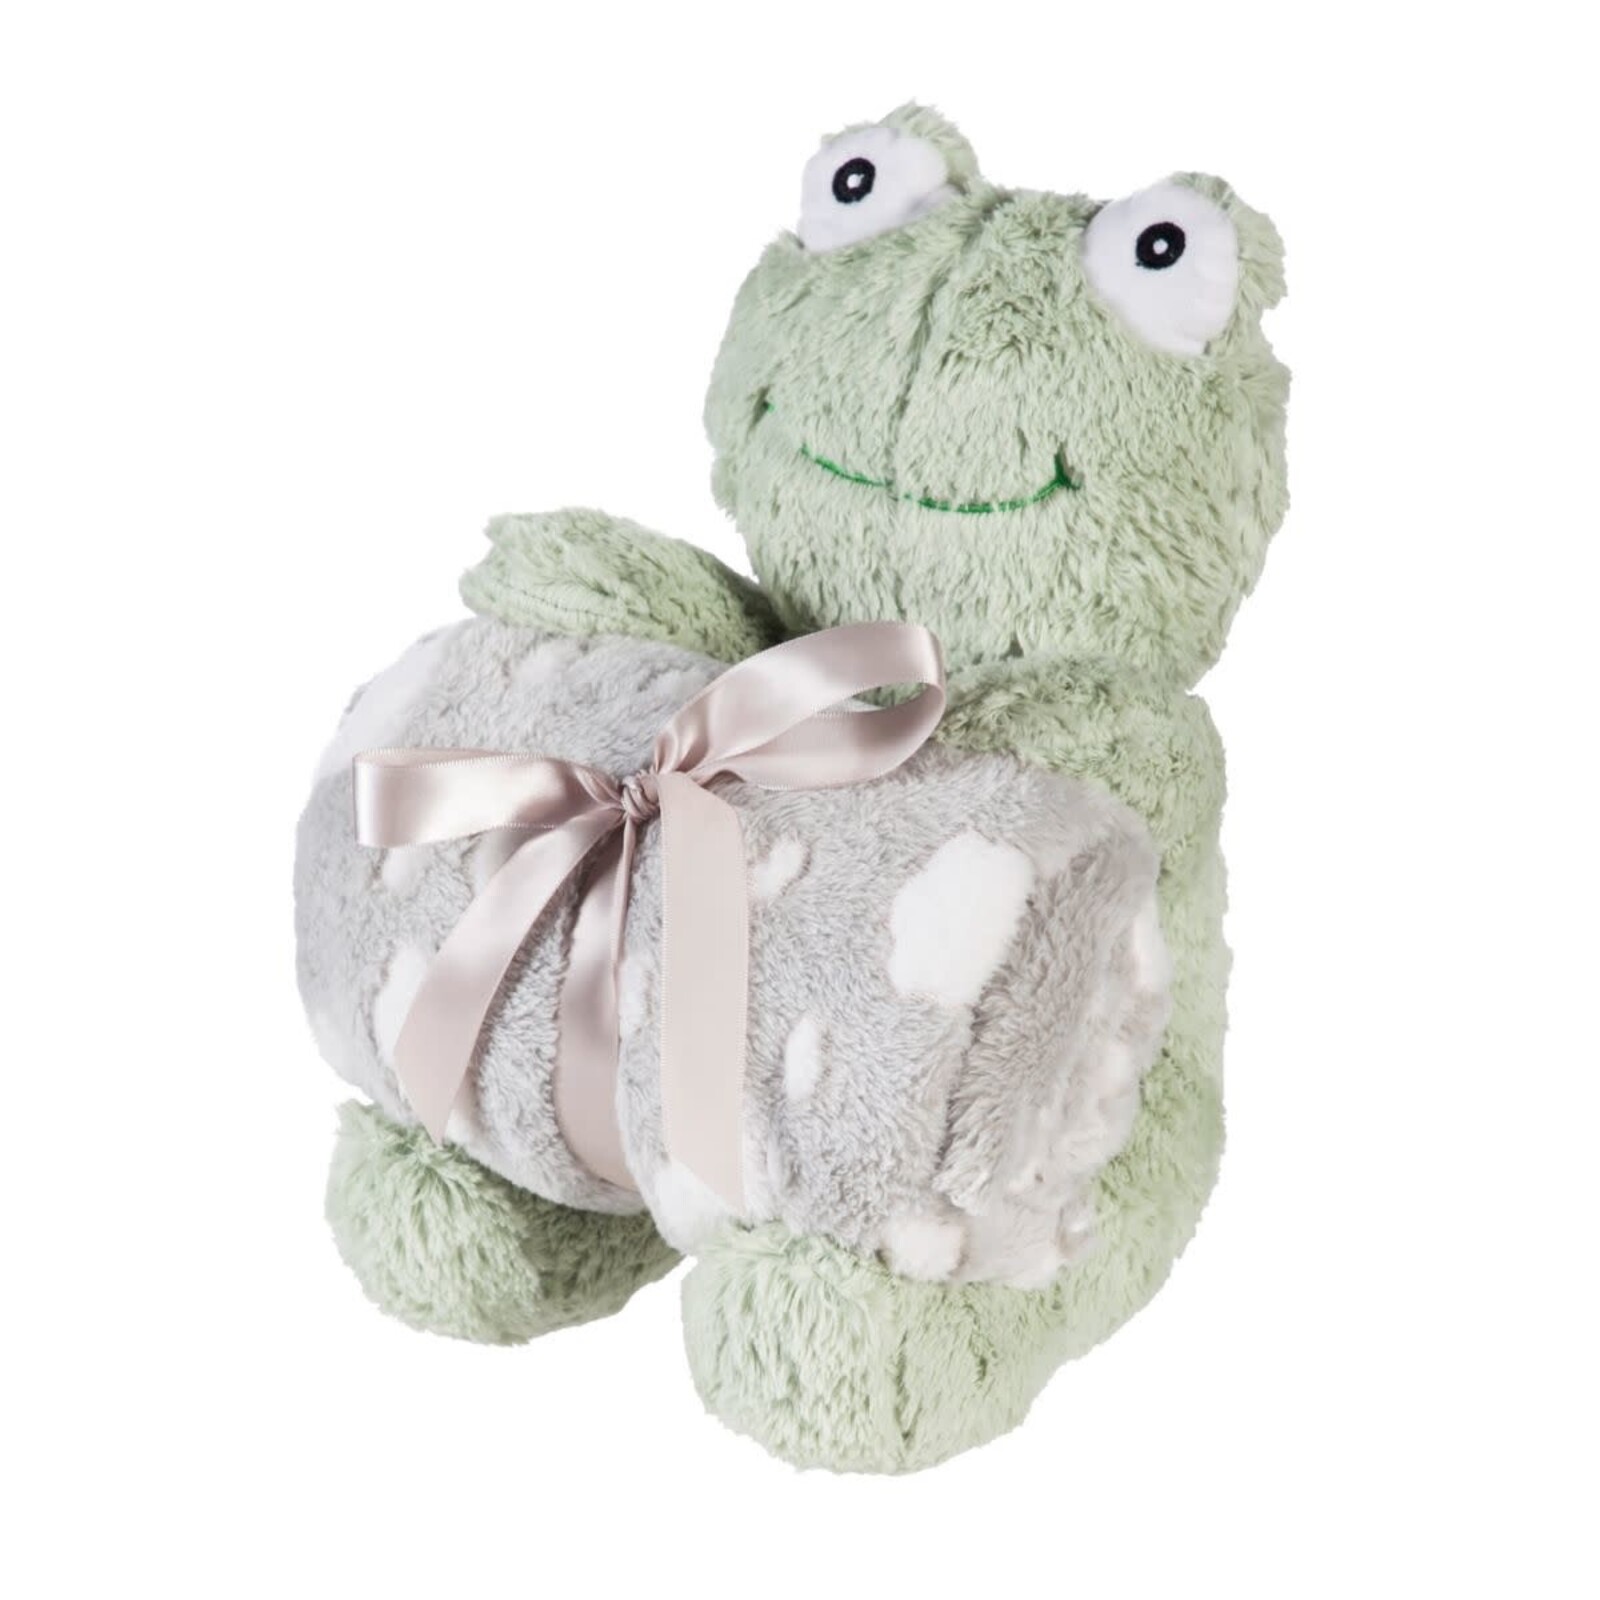 b. Boutique Cuddly Frog 10" Stuffed Animal w/ Blanket Gift Set, Green 7PLSH717 loading=